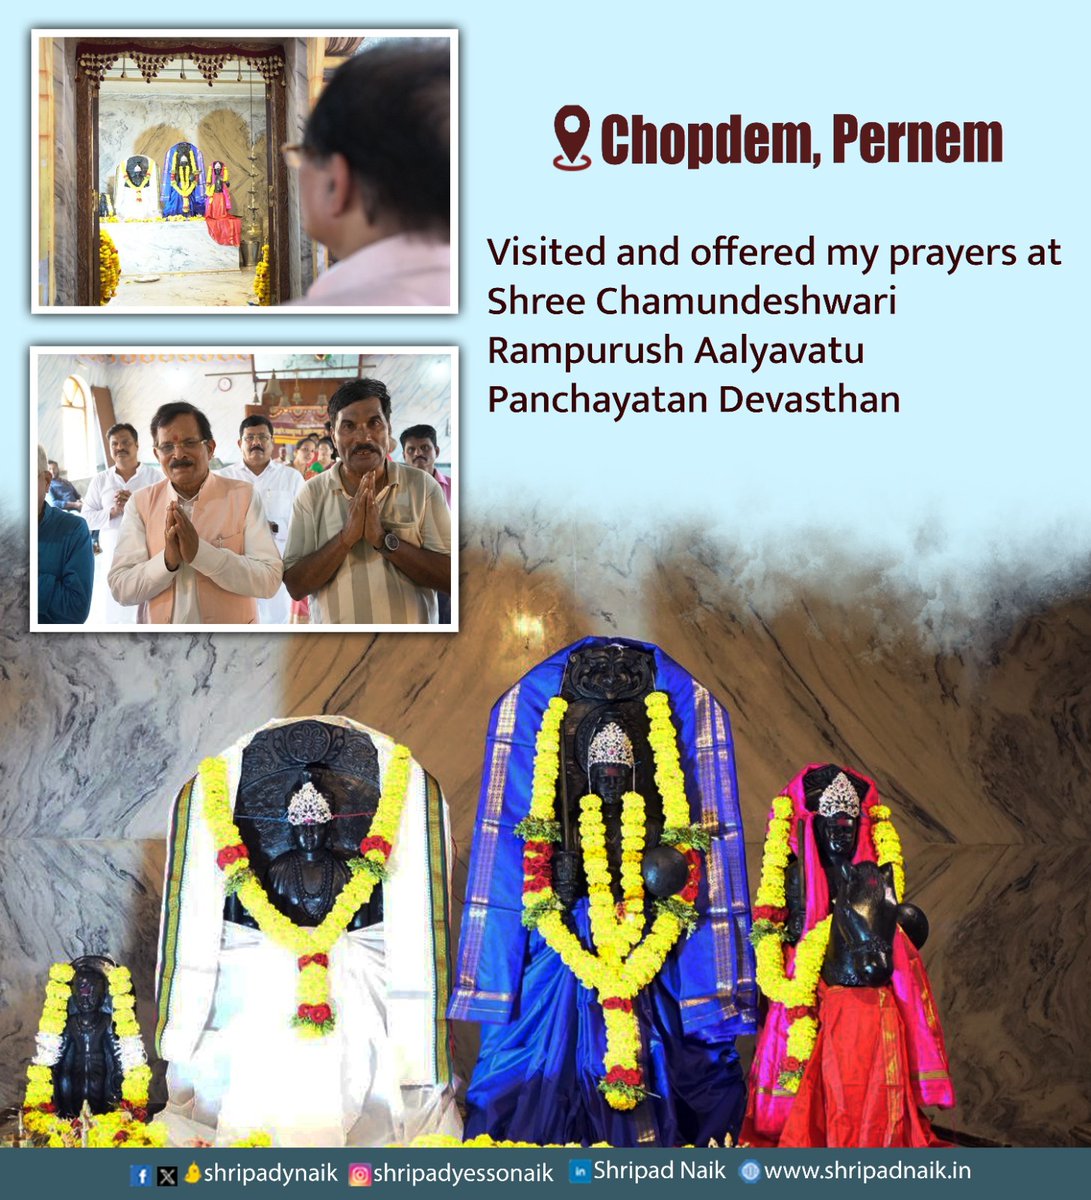 Visited and offered my prayers at Shree Chamundeshwari Rampurush Aalyavatu Panchayatan Devasthan, Chopdem, Pernem.